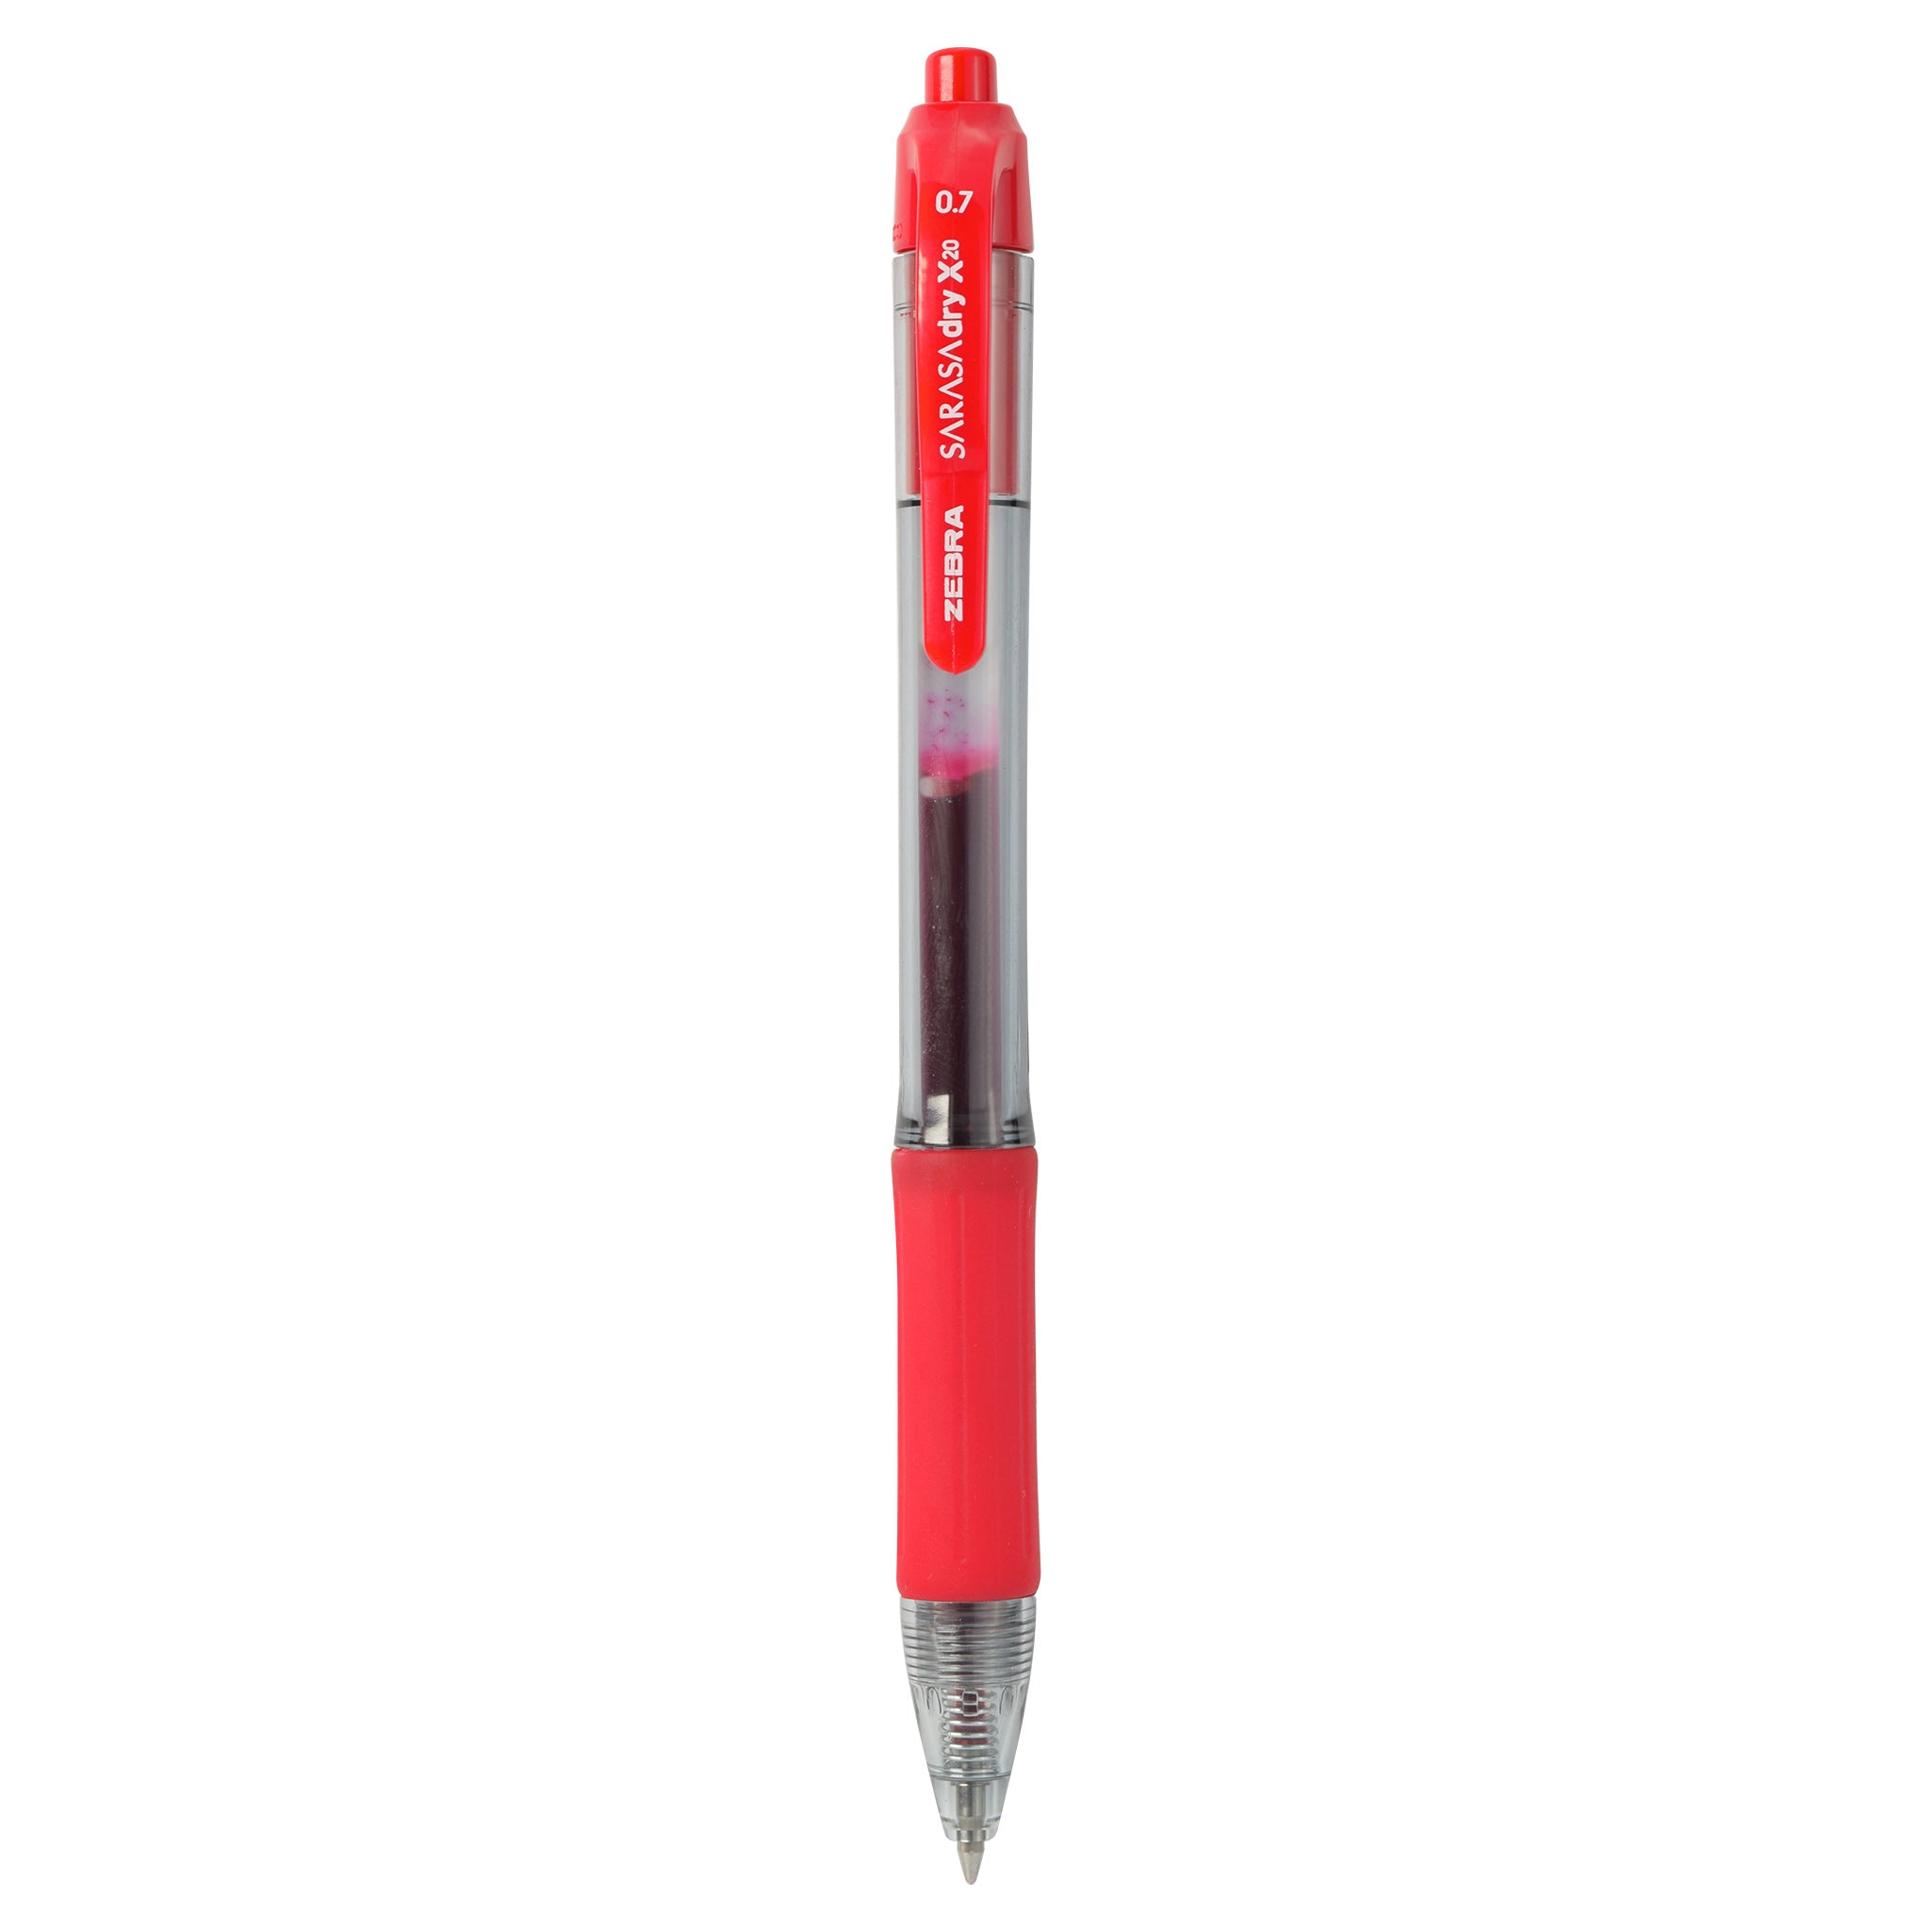 Felt Tip Pens, 30 Colors & 15 Black & 15 Blue & 1 Red Medium Point